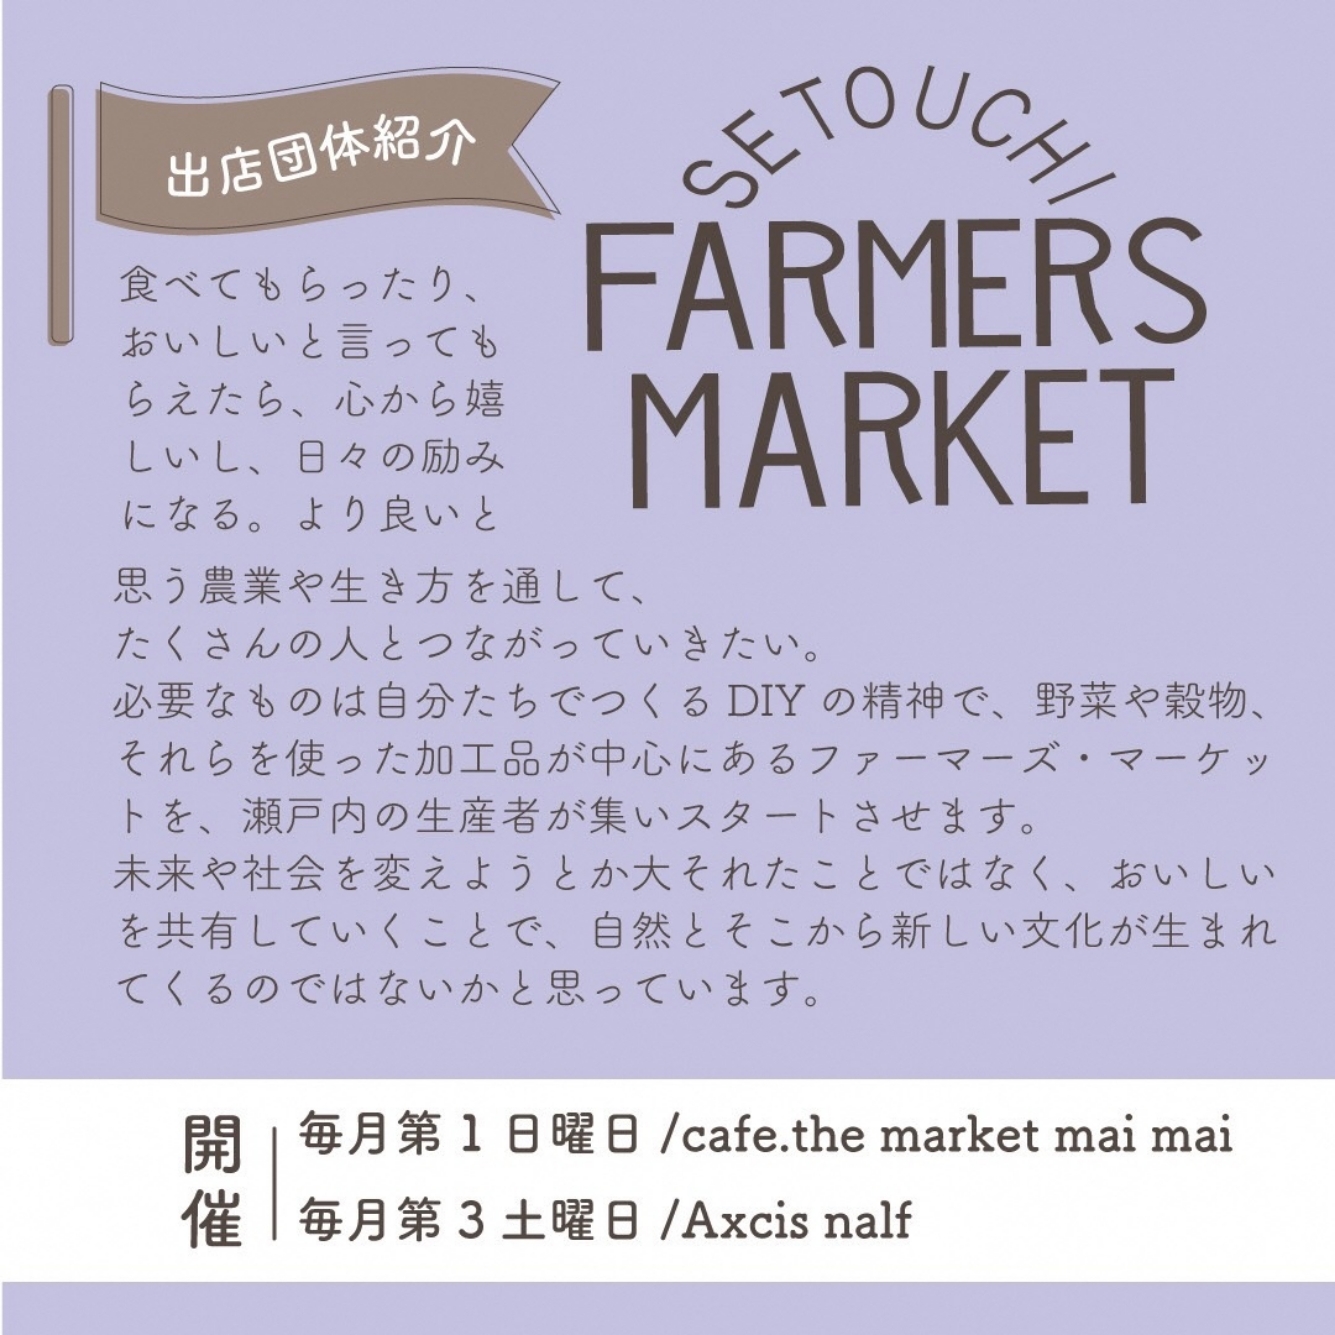 Setouchi Farmers Market